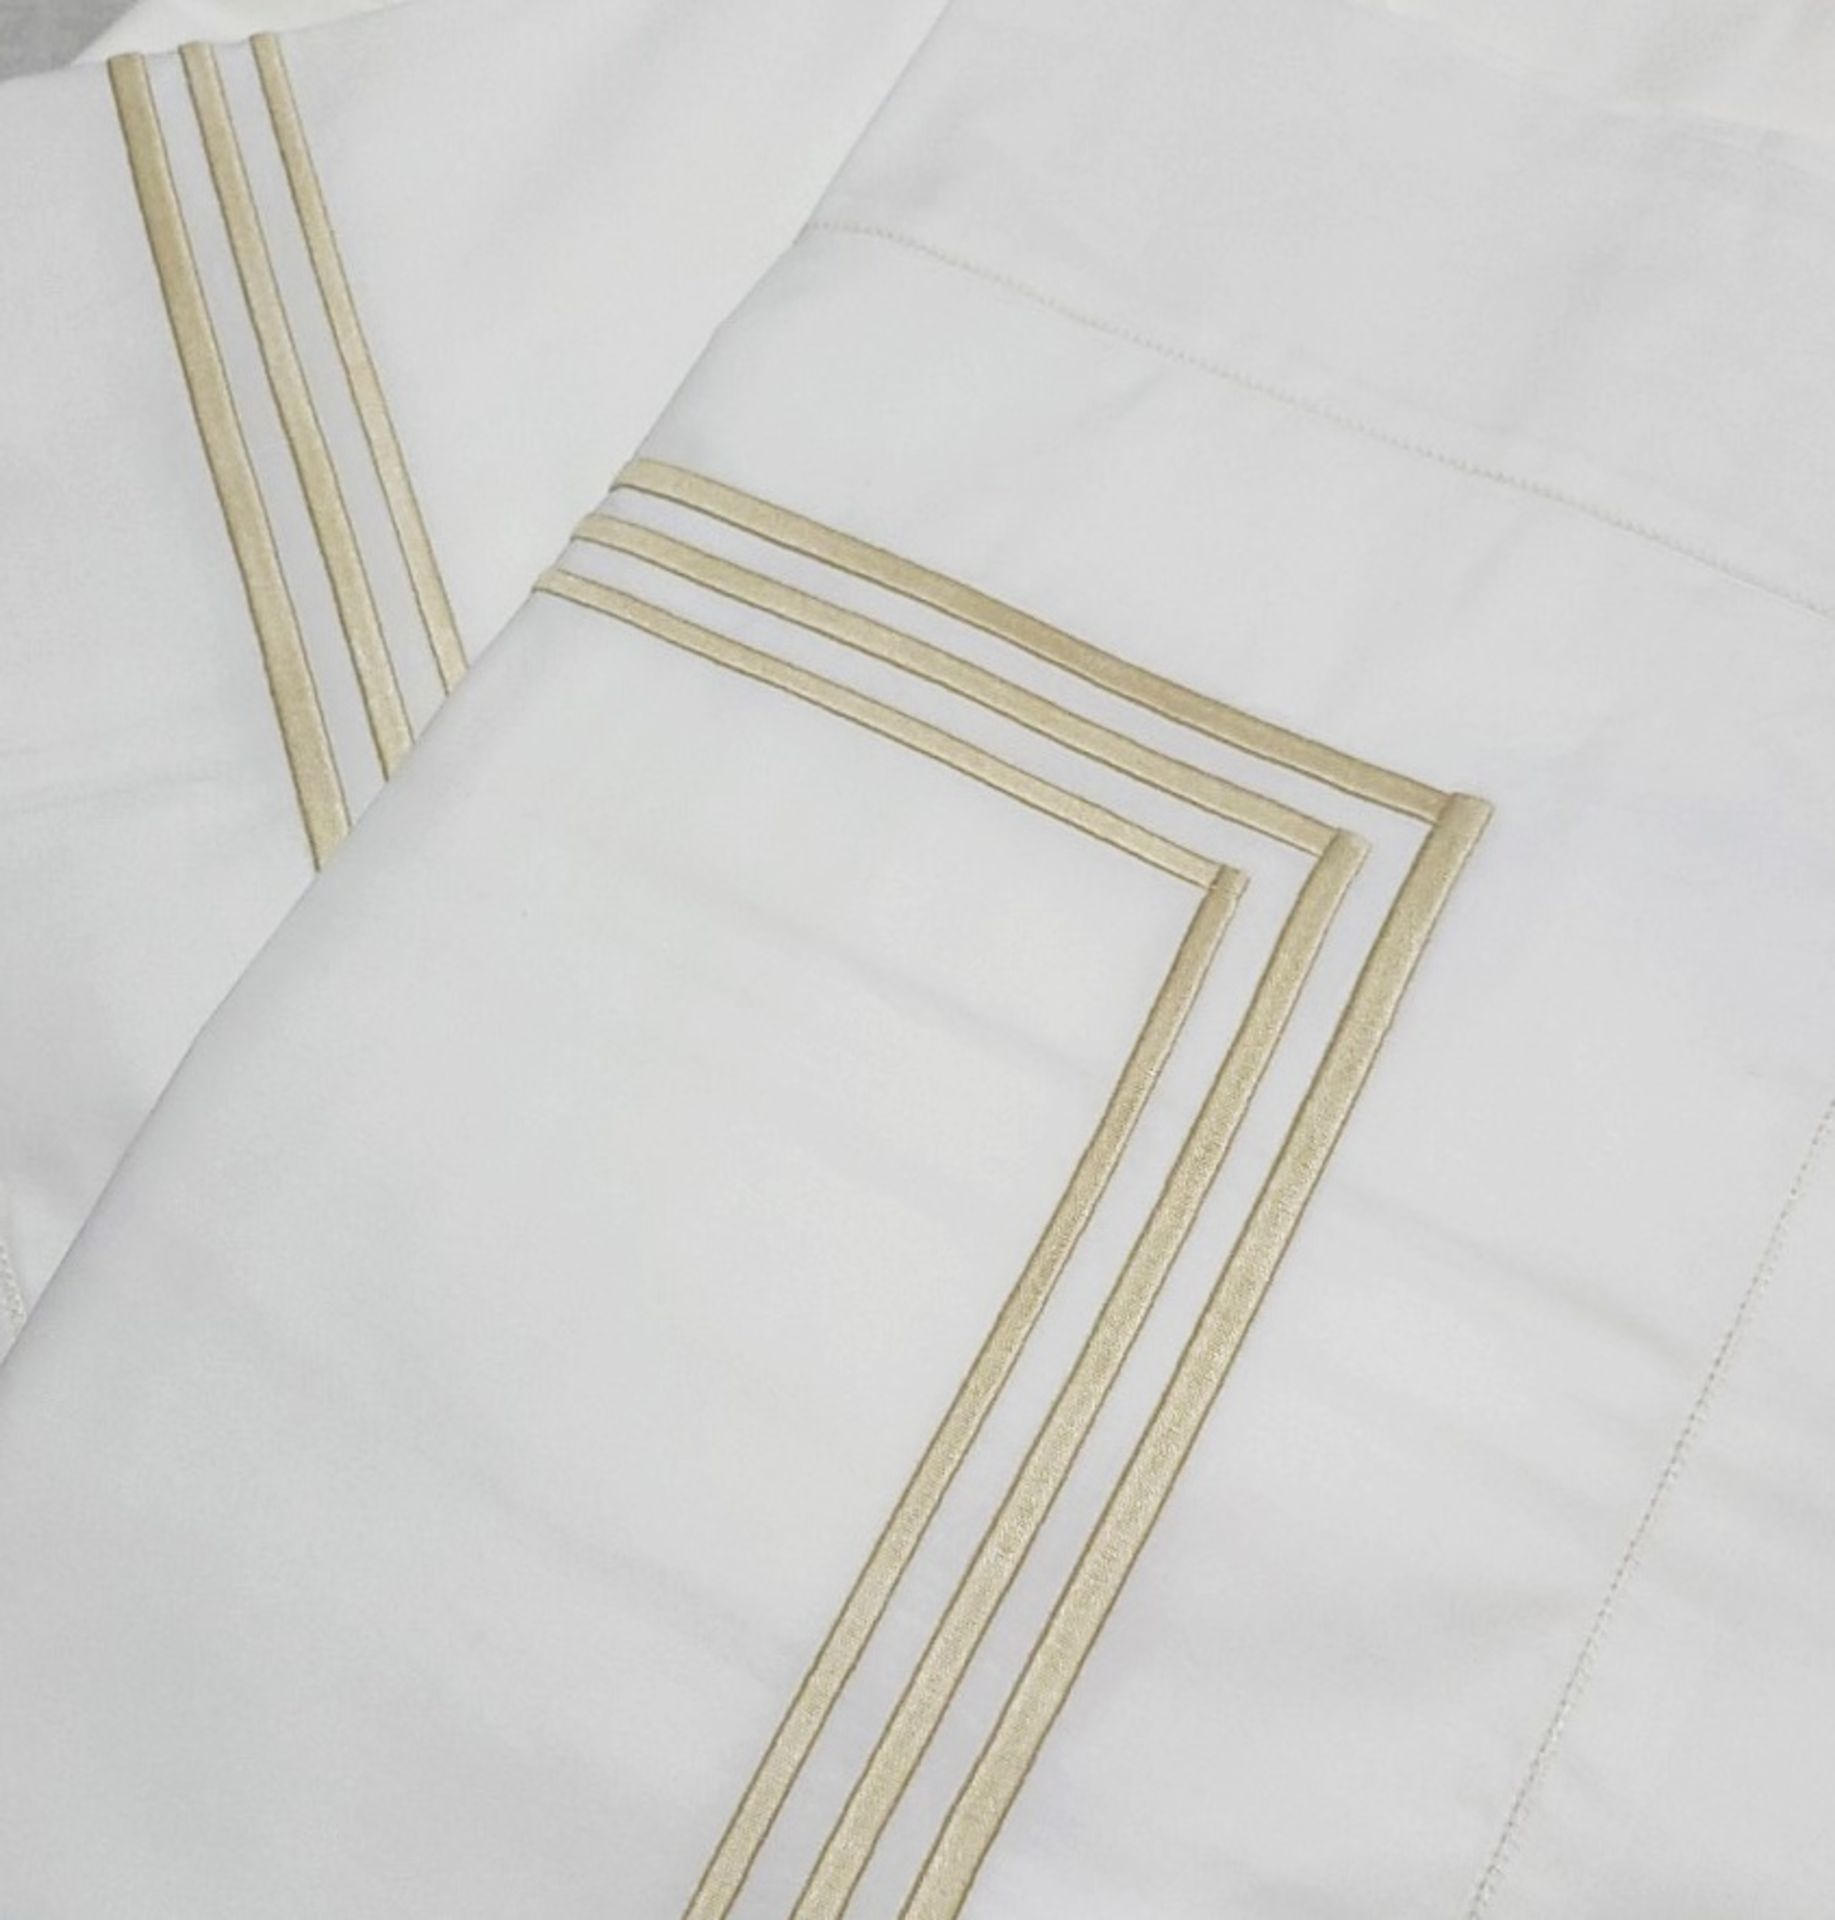 4-Piece PRATESI 'Tre Riche' Gold Embroidered Angel Skin Cotton Sheet & Pillow Set - Original